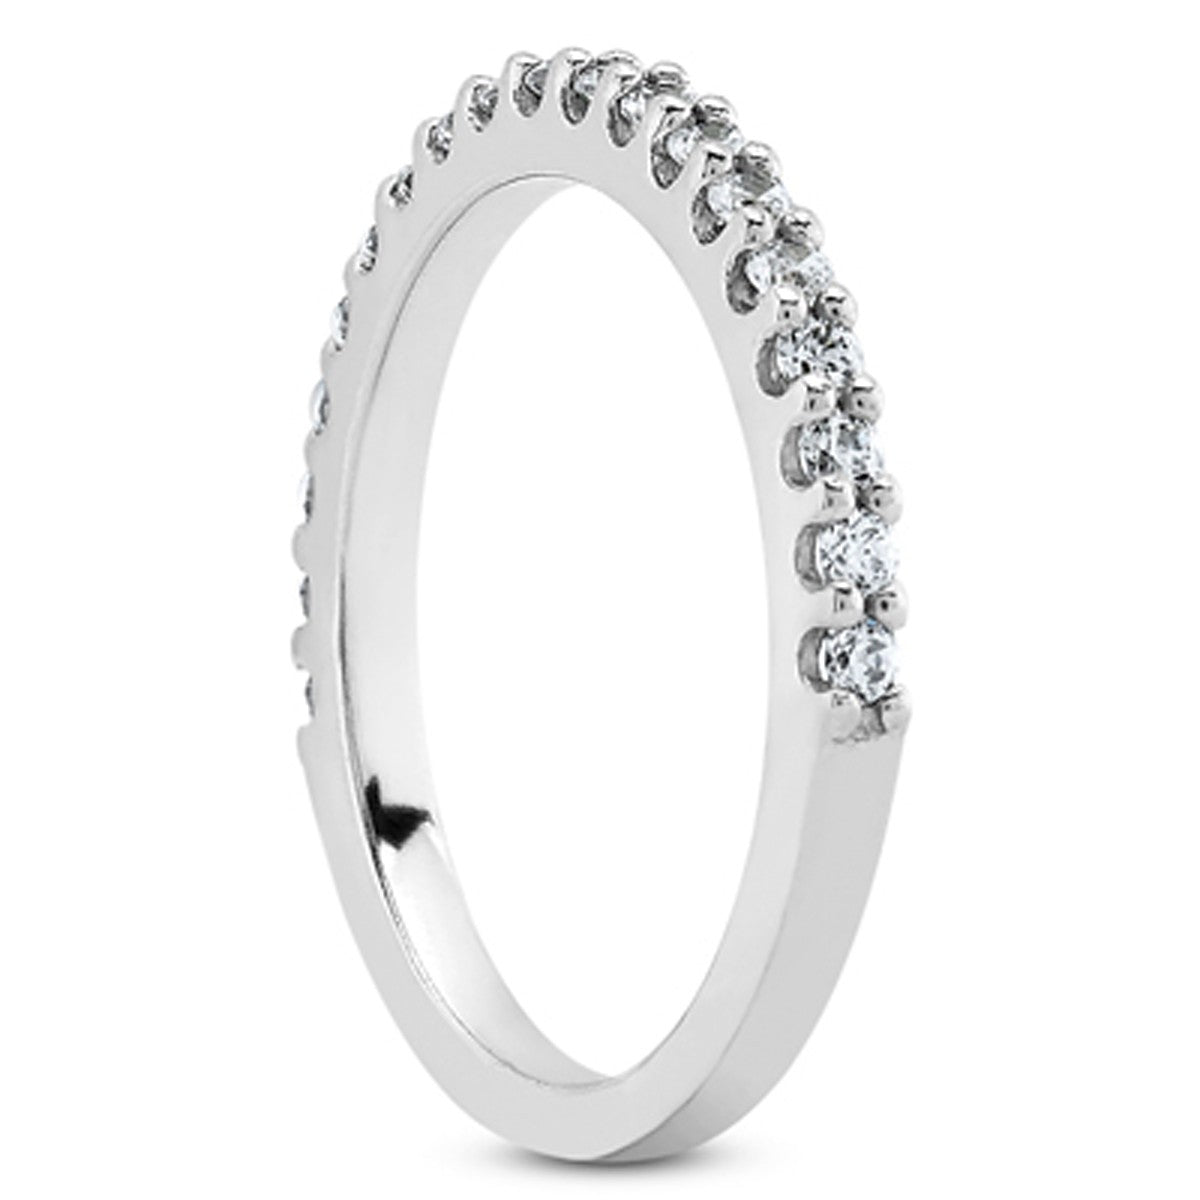 14k White Gold Shared Prong Diamond Wedding Ring Band with U Settings